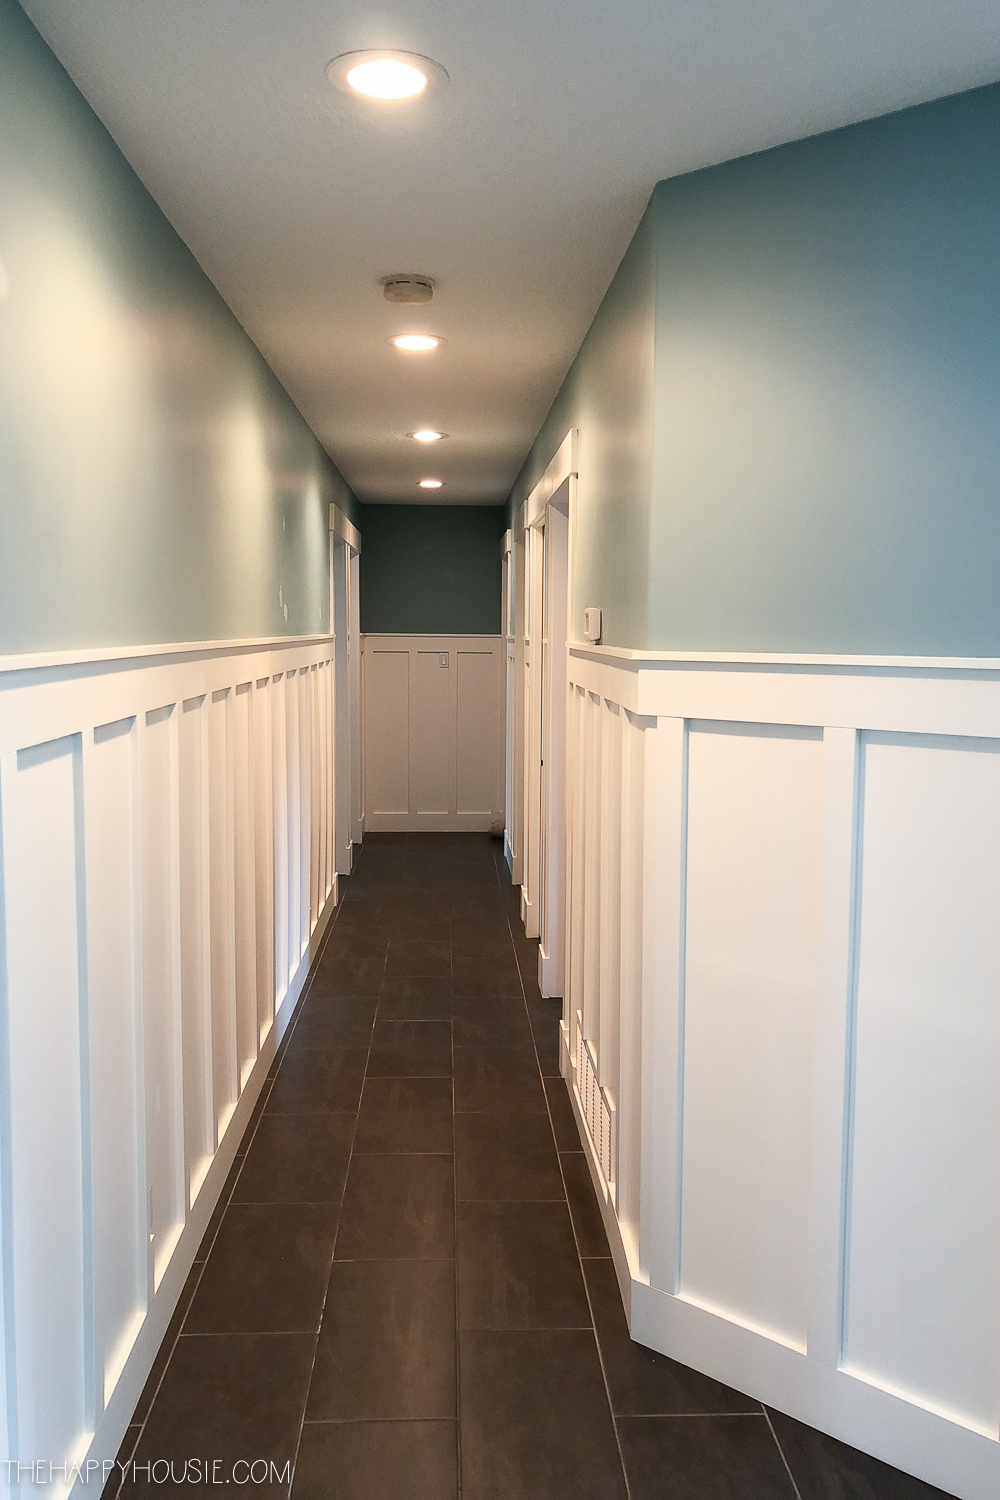 A long undecorated narrow hallway.